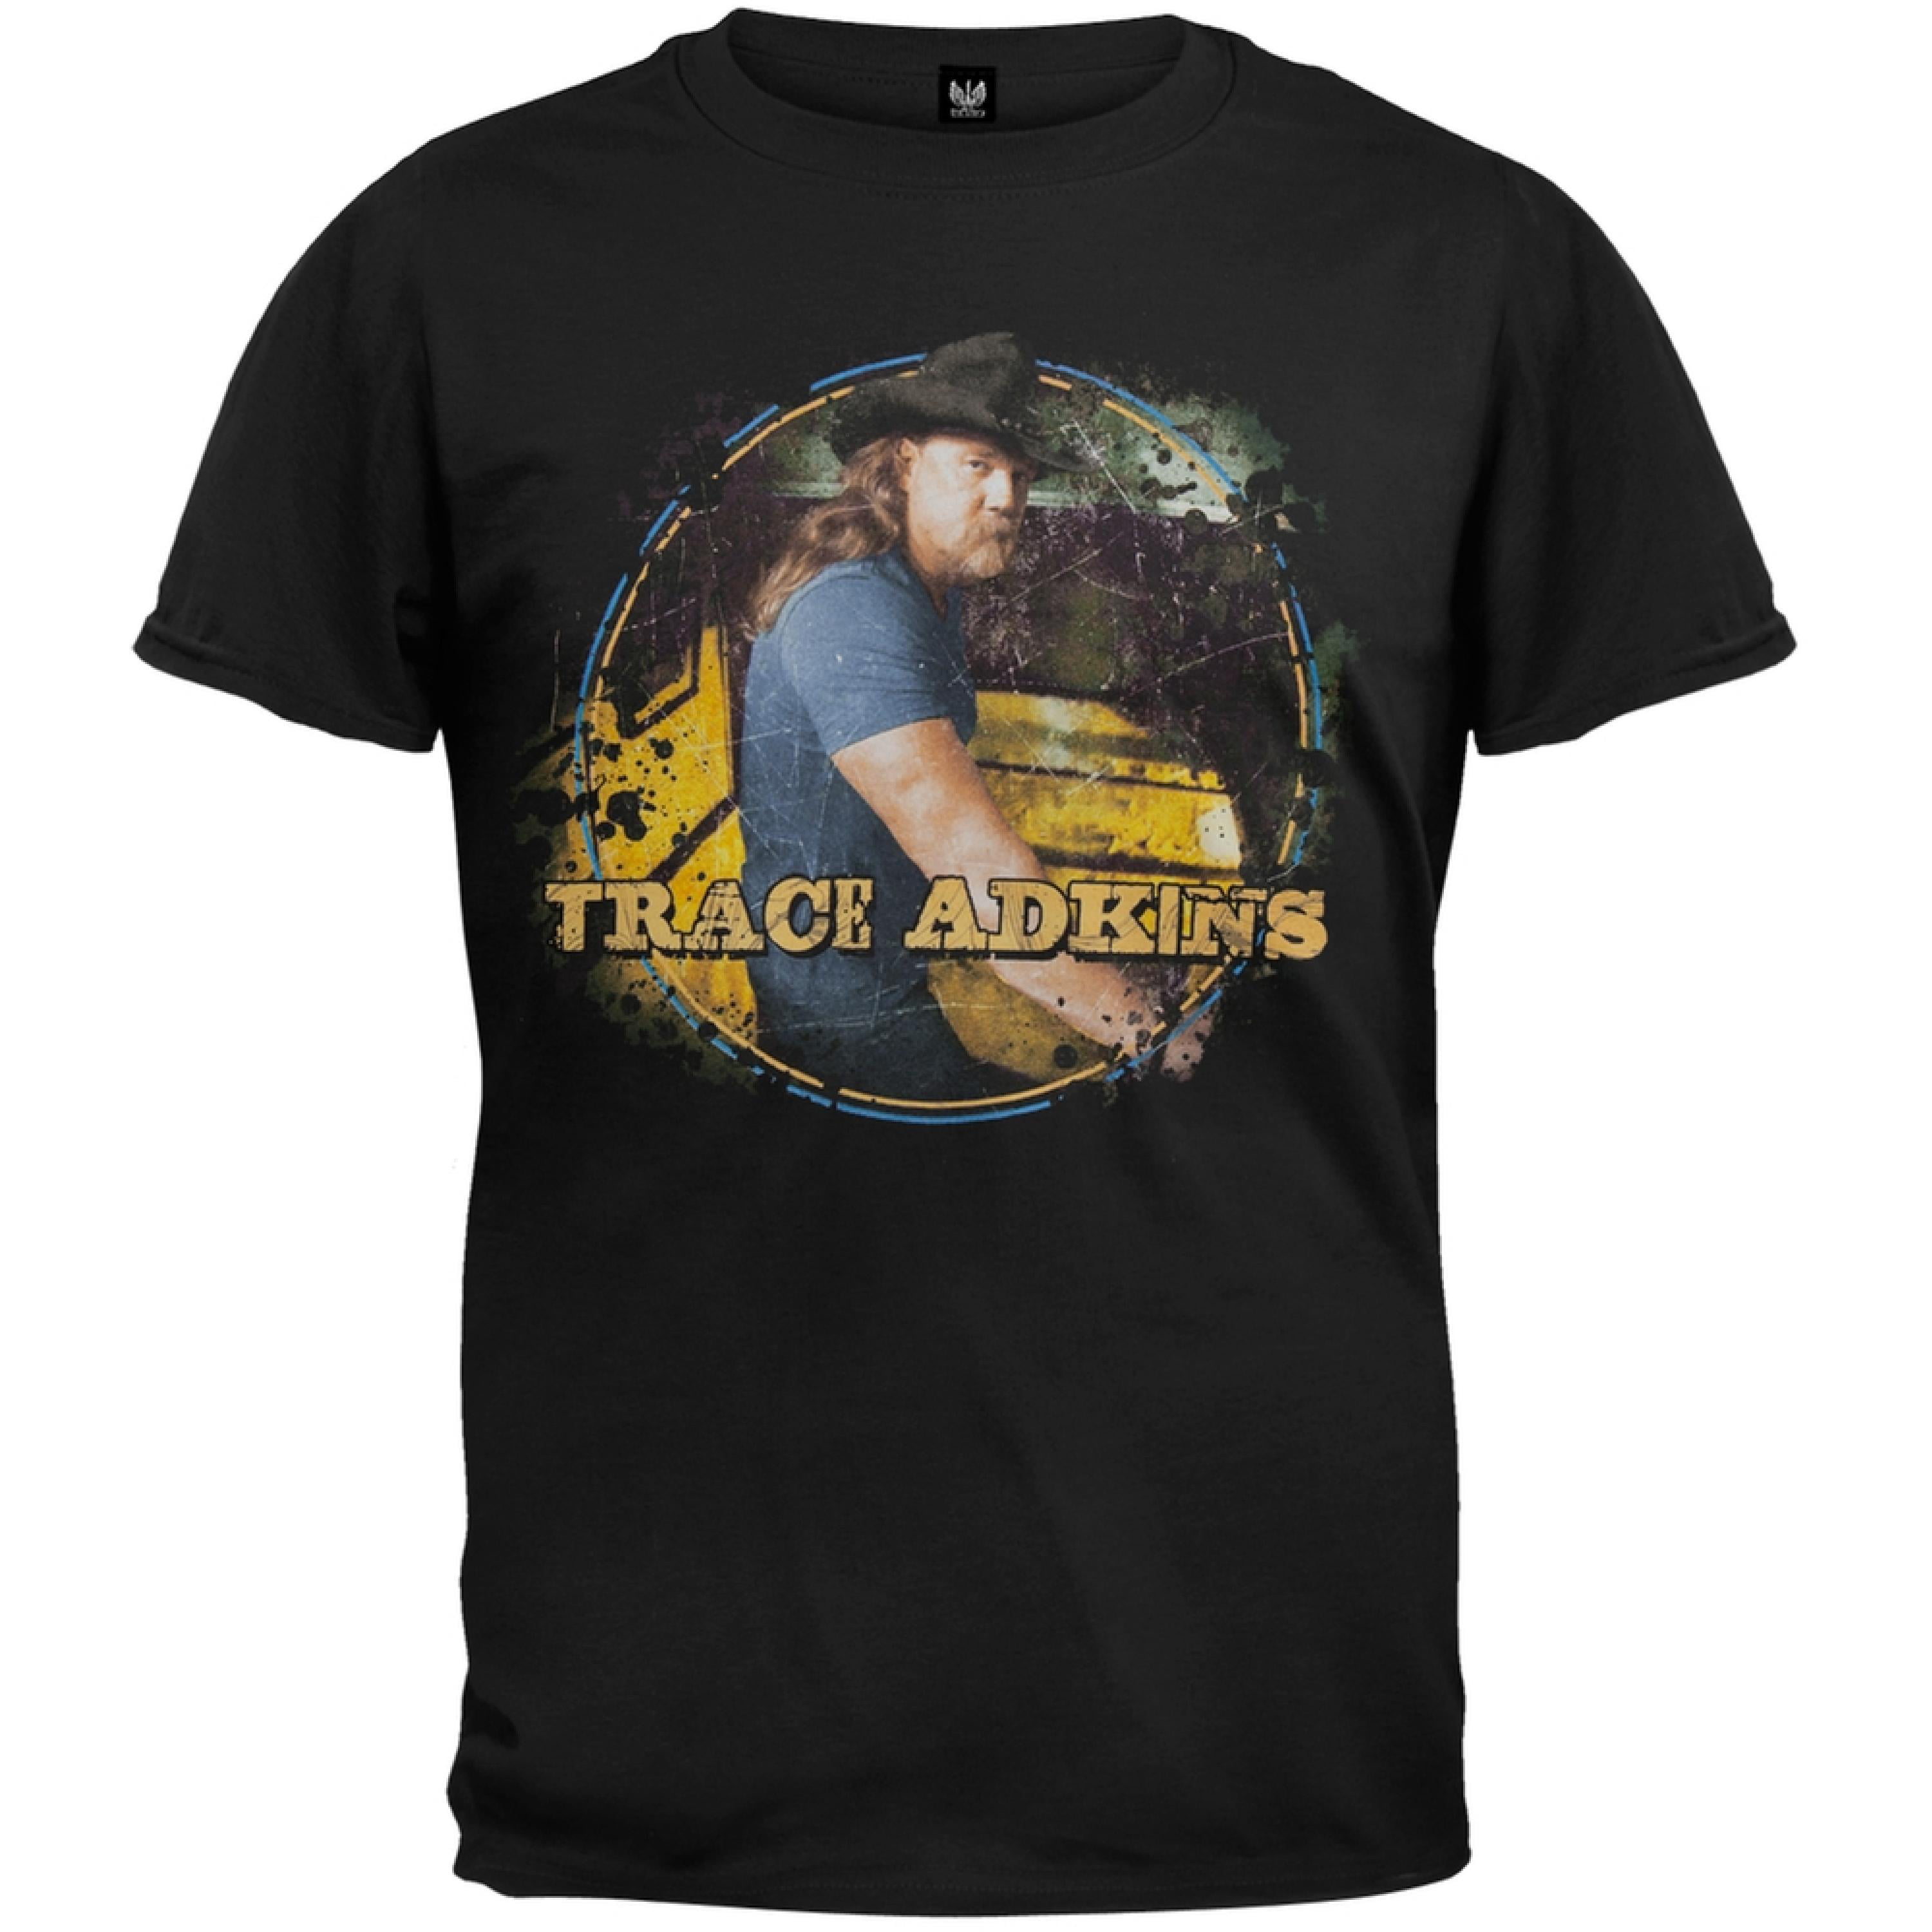 Trace Adkins - Trace Adkins - Photo Stairs 2011 Tour T-Shirt - Walmart